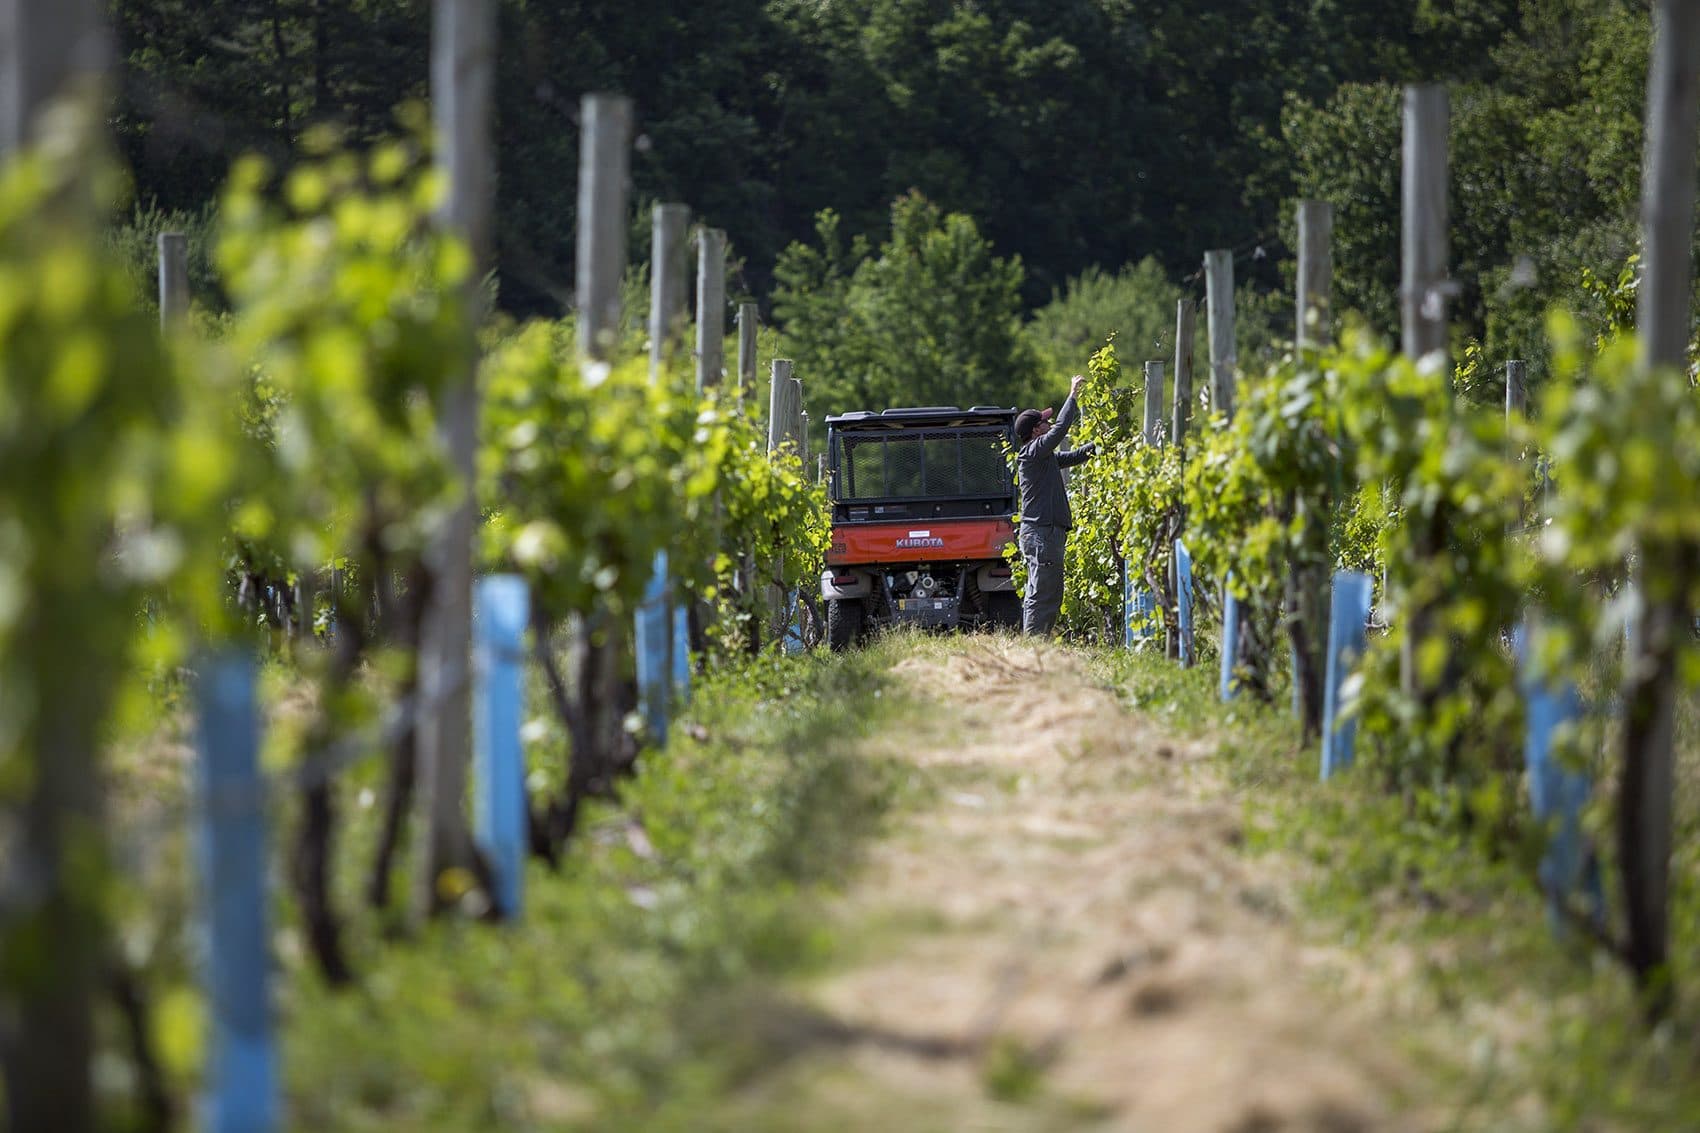 Dan Ramsey, an intern from UMass Amherst, tying up grapevines in the vineyard. (Jesse Costa/WBUR)